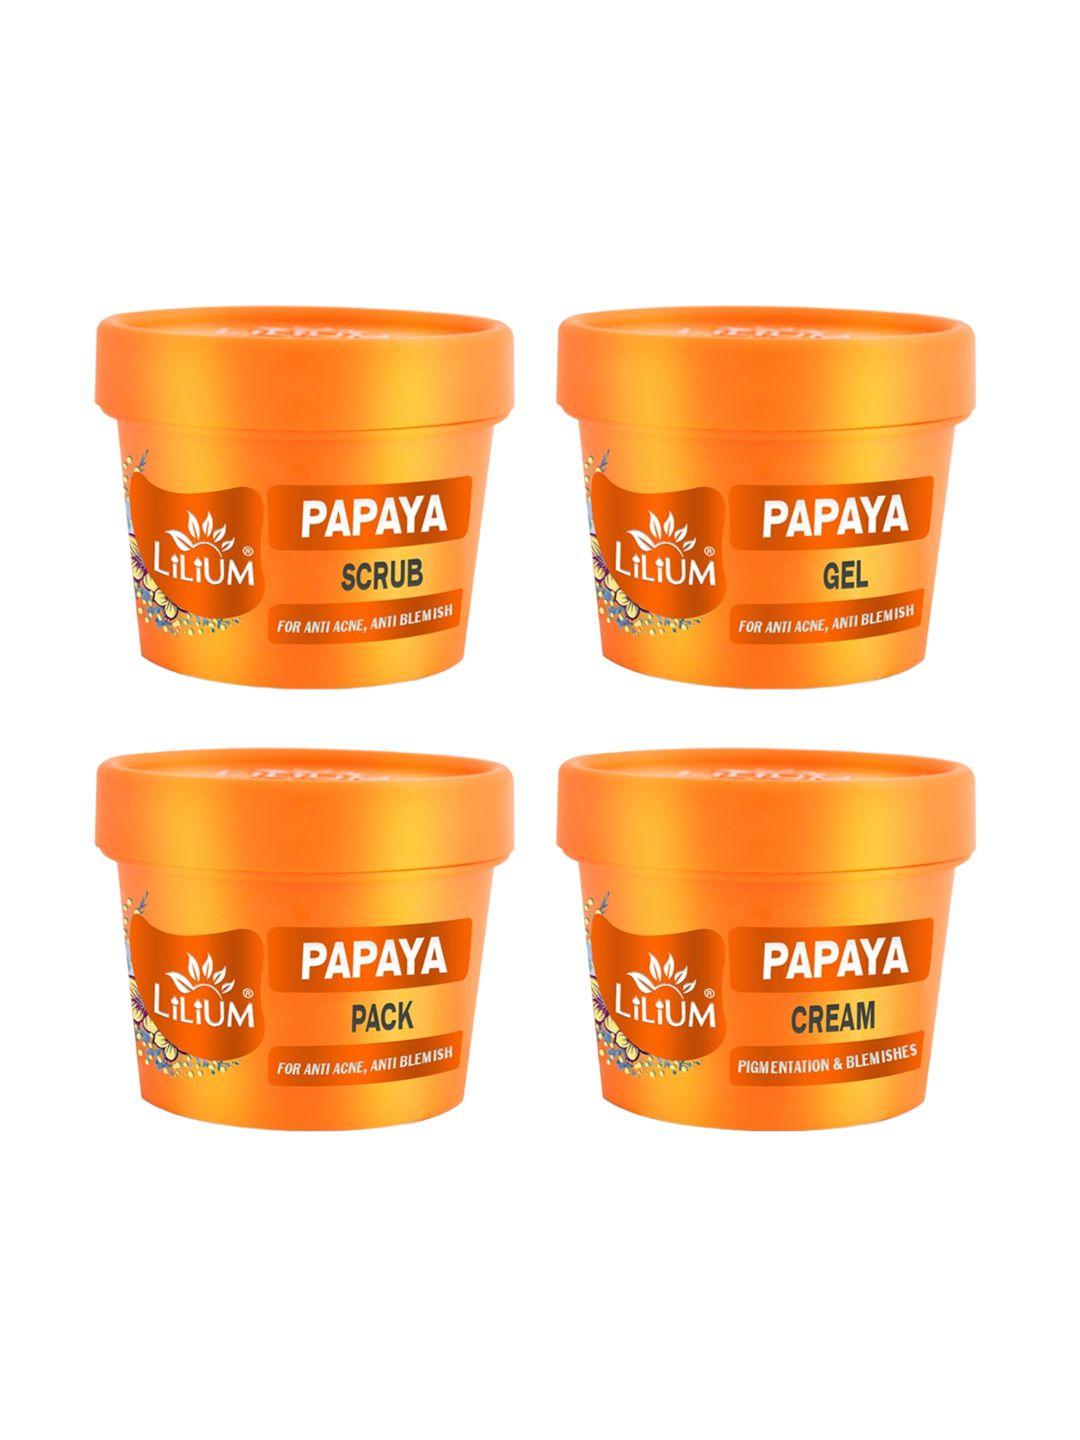 lilium-papaya-facial-scrub-gel-pack-cream-set-for-acne-&-blemishes---100g-each